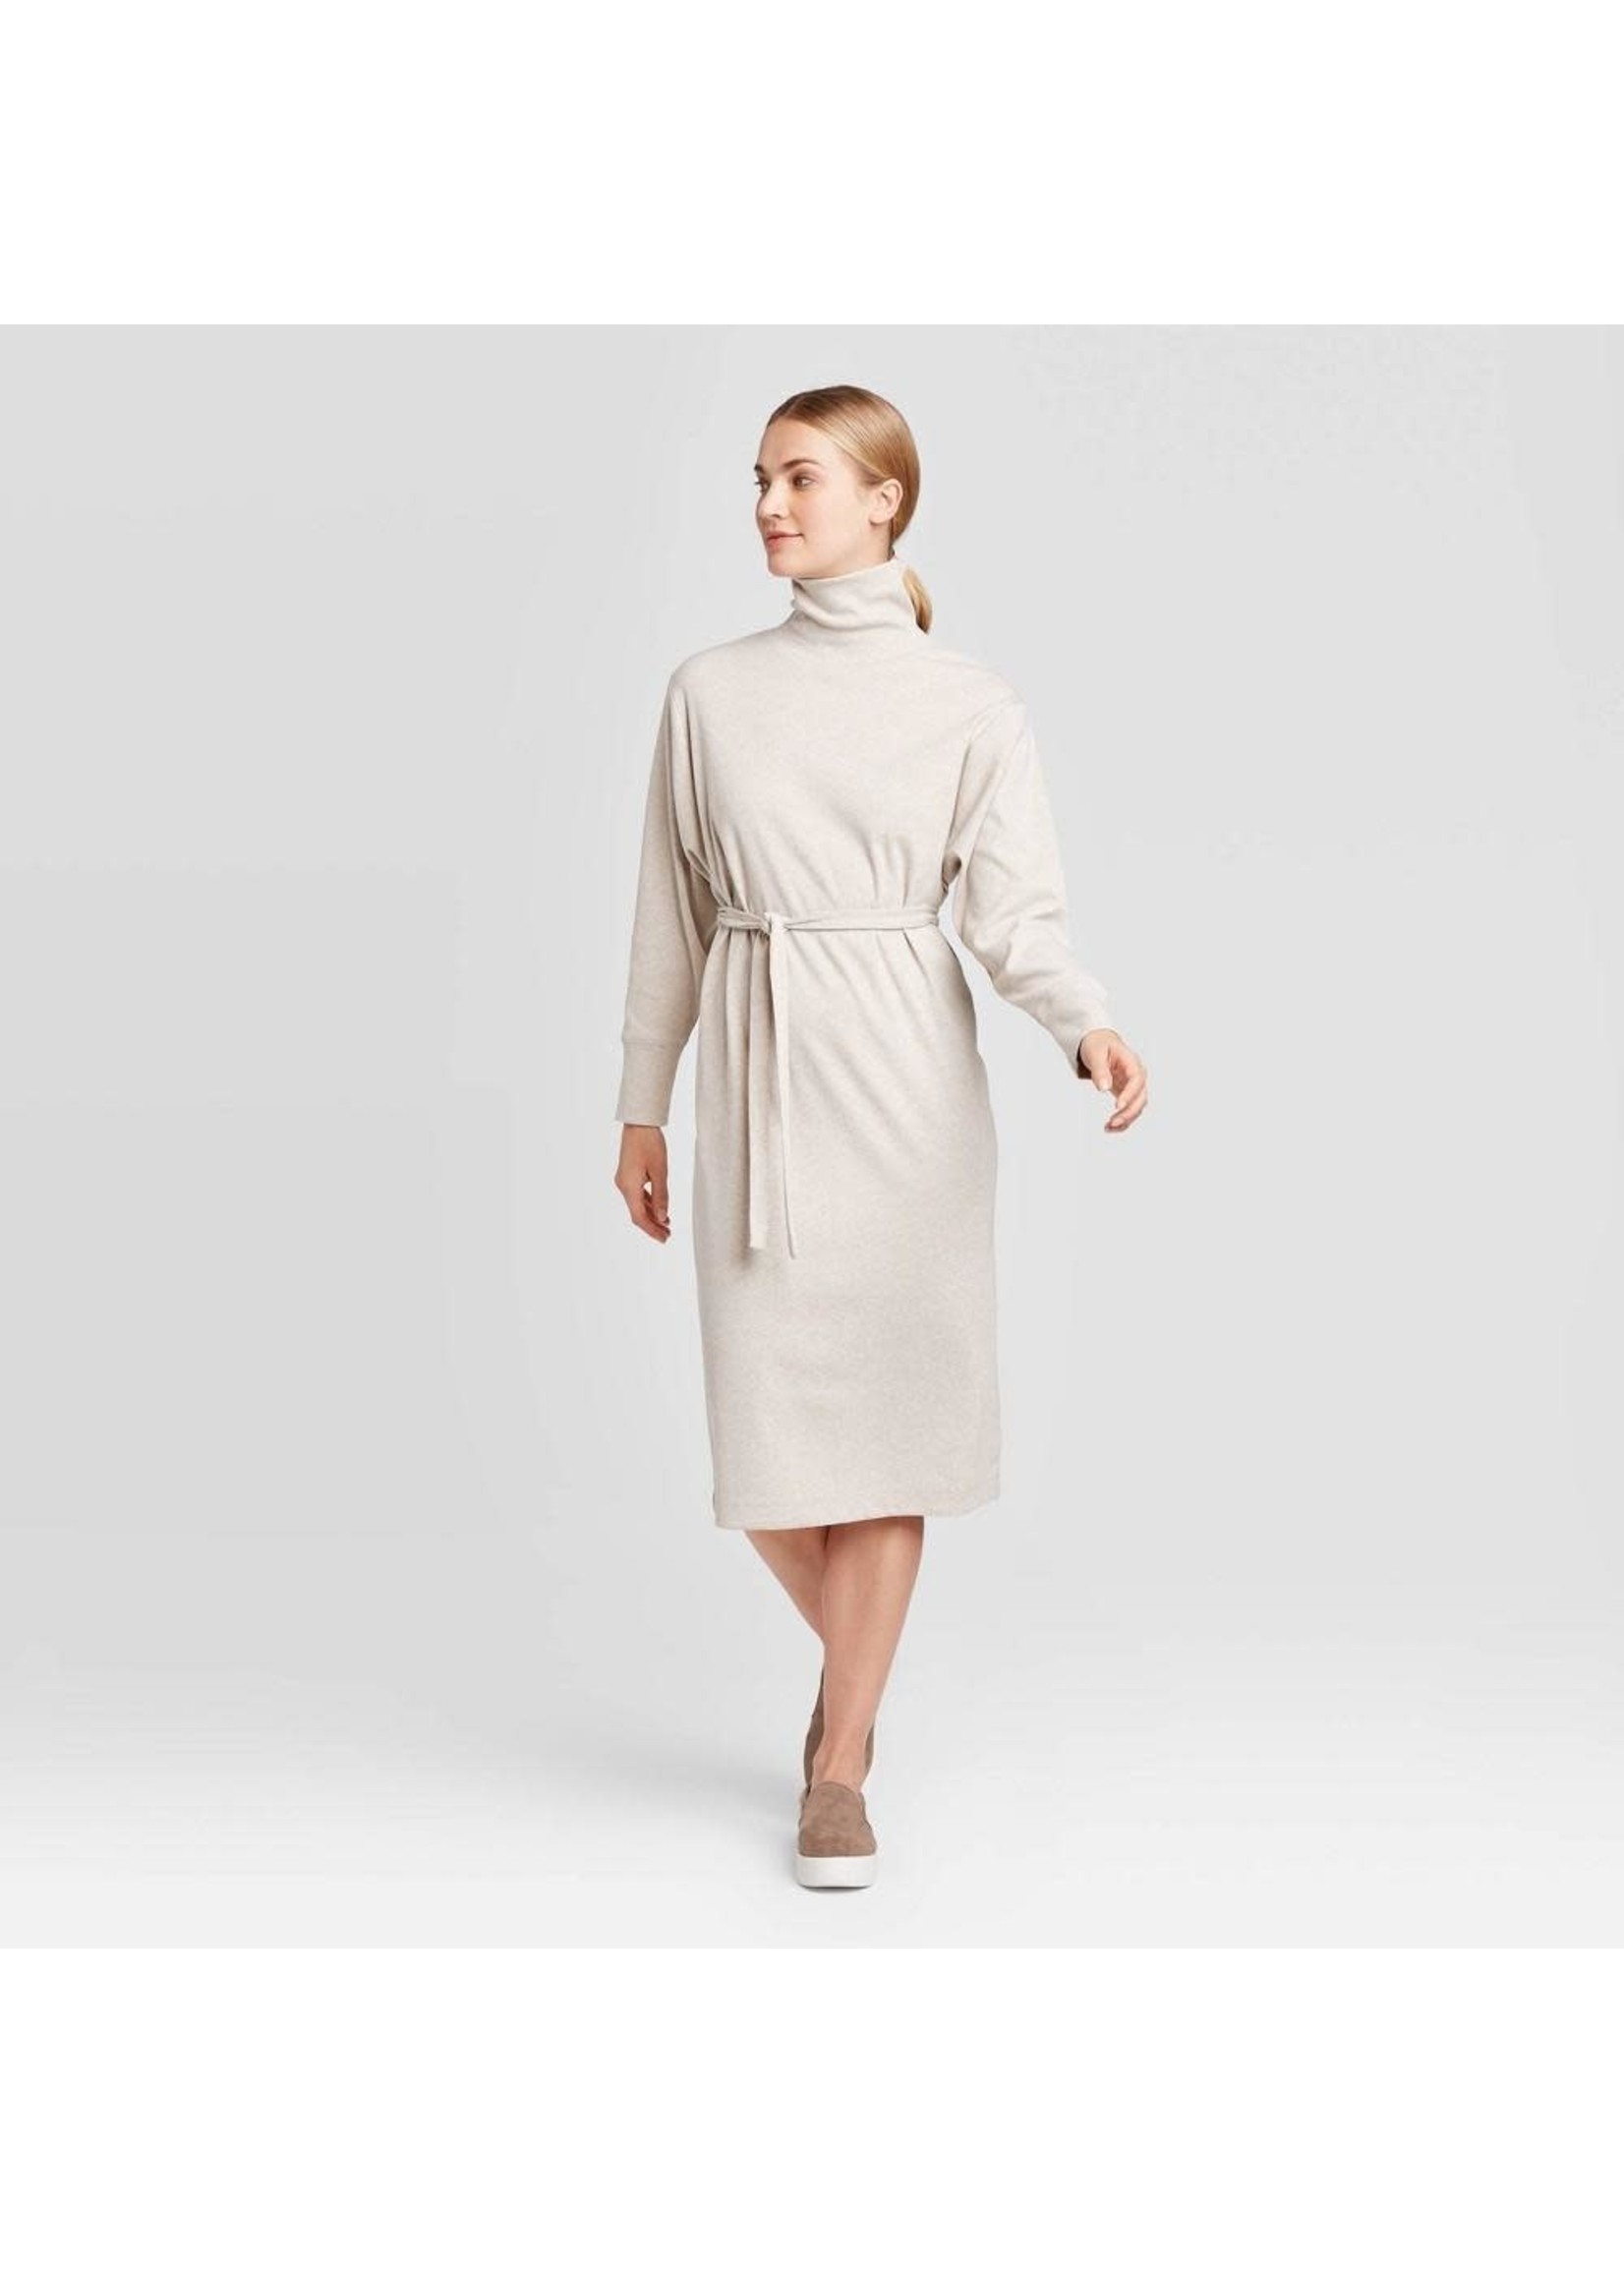 Women's Long Sleeve Mock Turtleneck T-Shirt Midi Dress - Prologueâ„¢ Cream XS